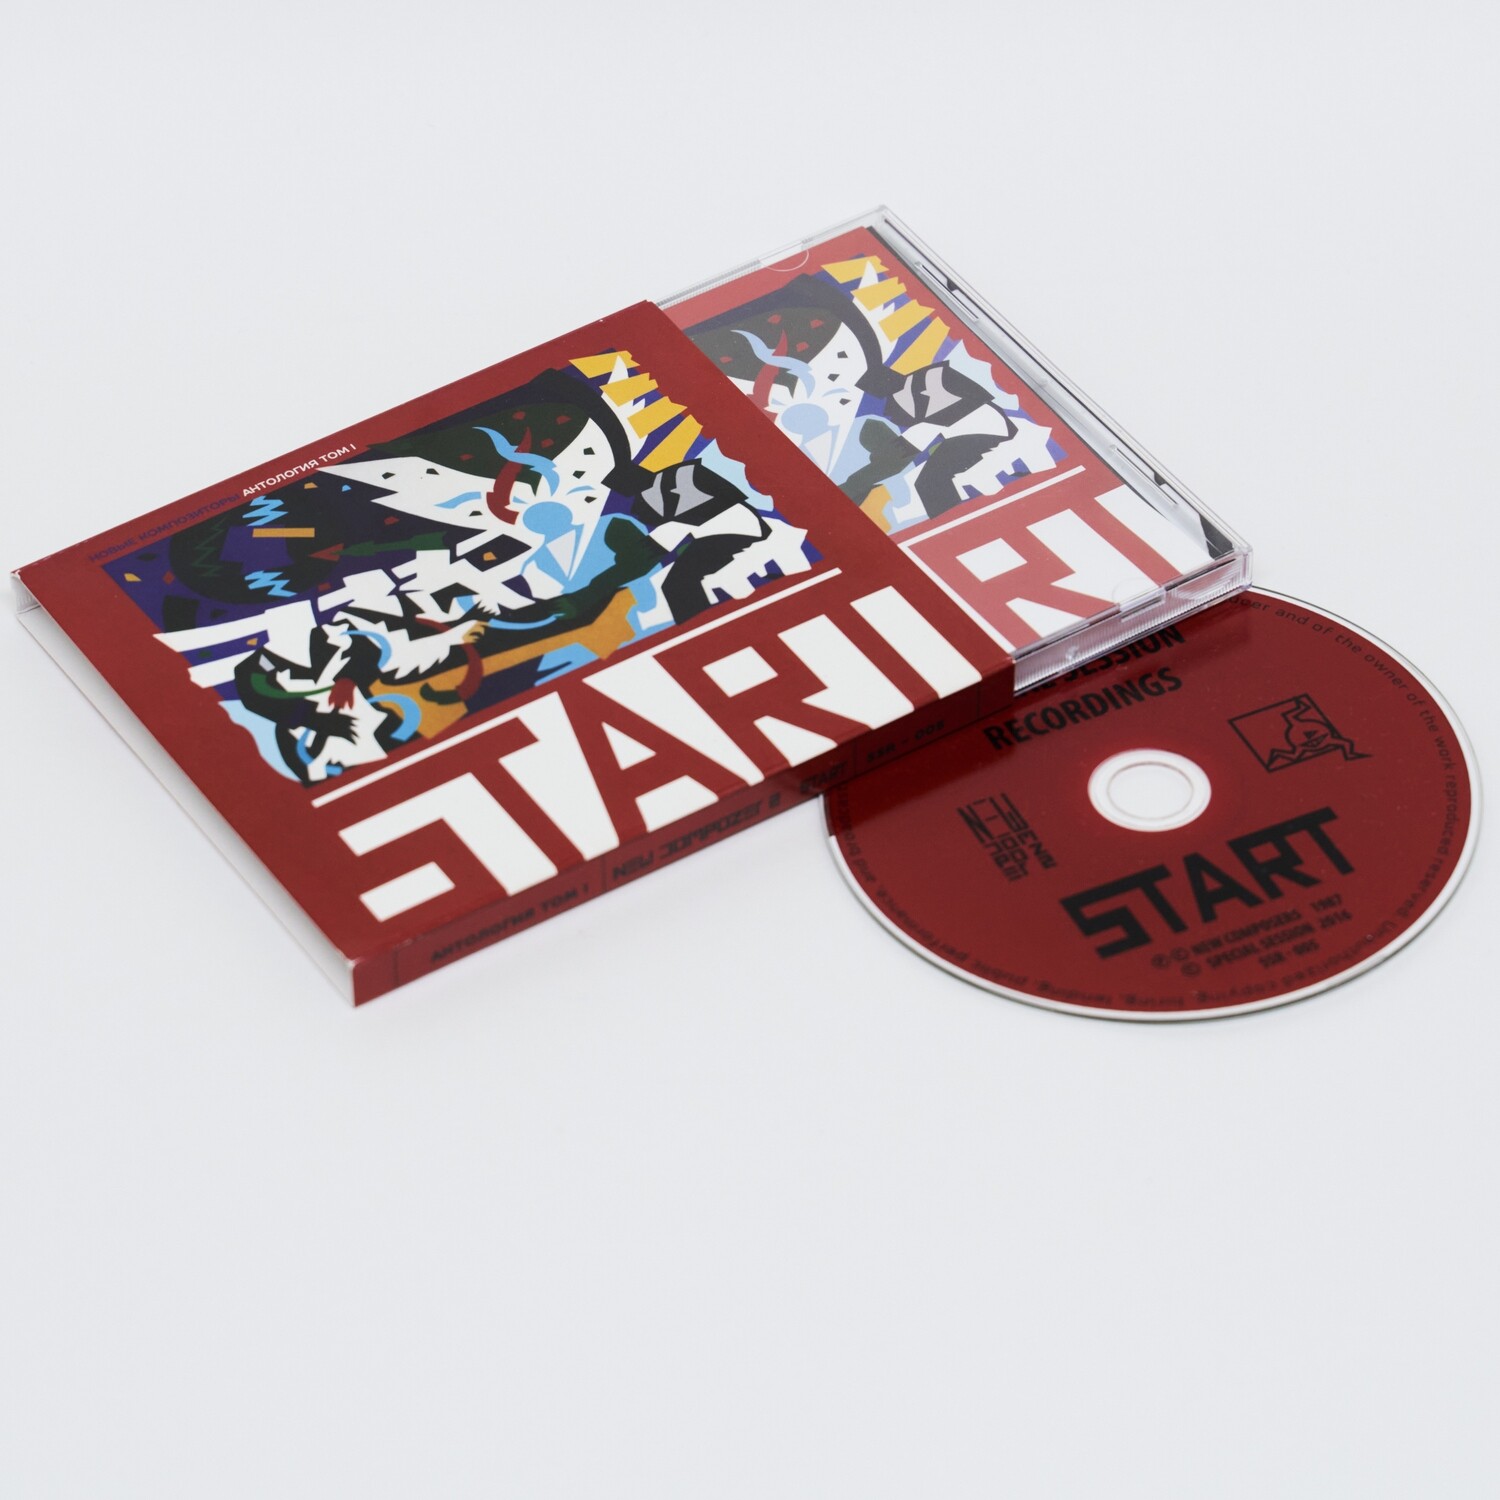 CD: Новые Композиторы — «START» (1987/2017) [Expanded Edition]